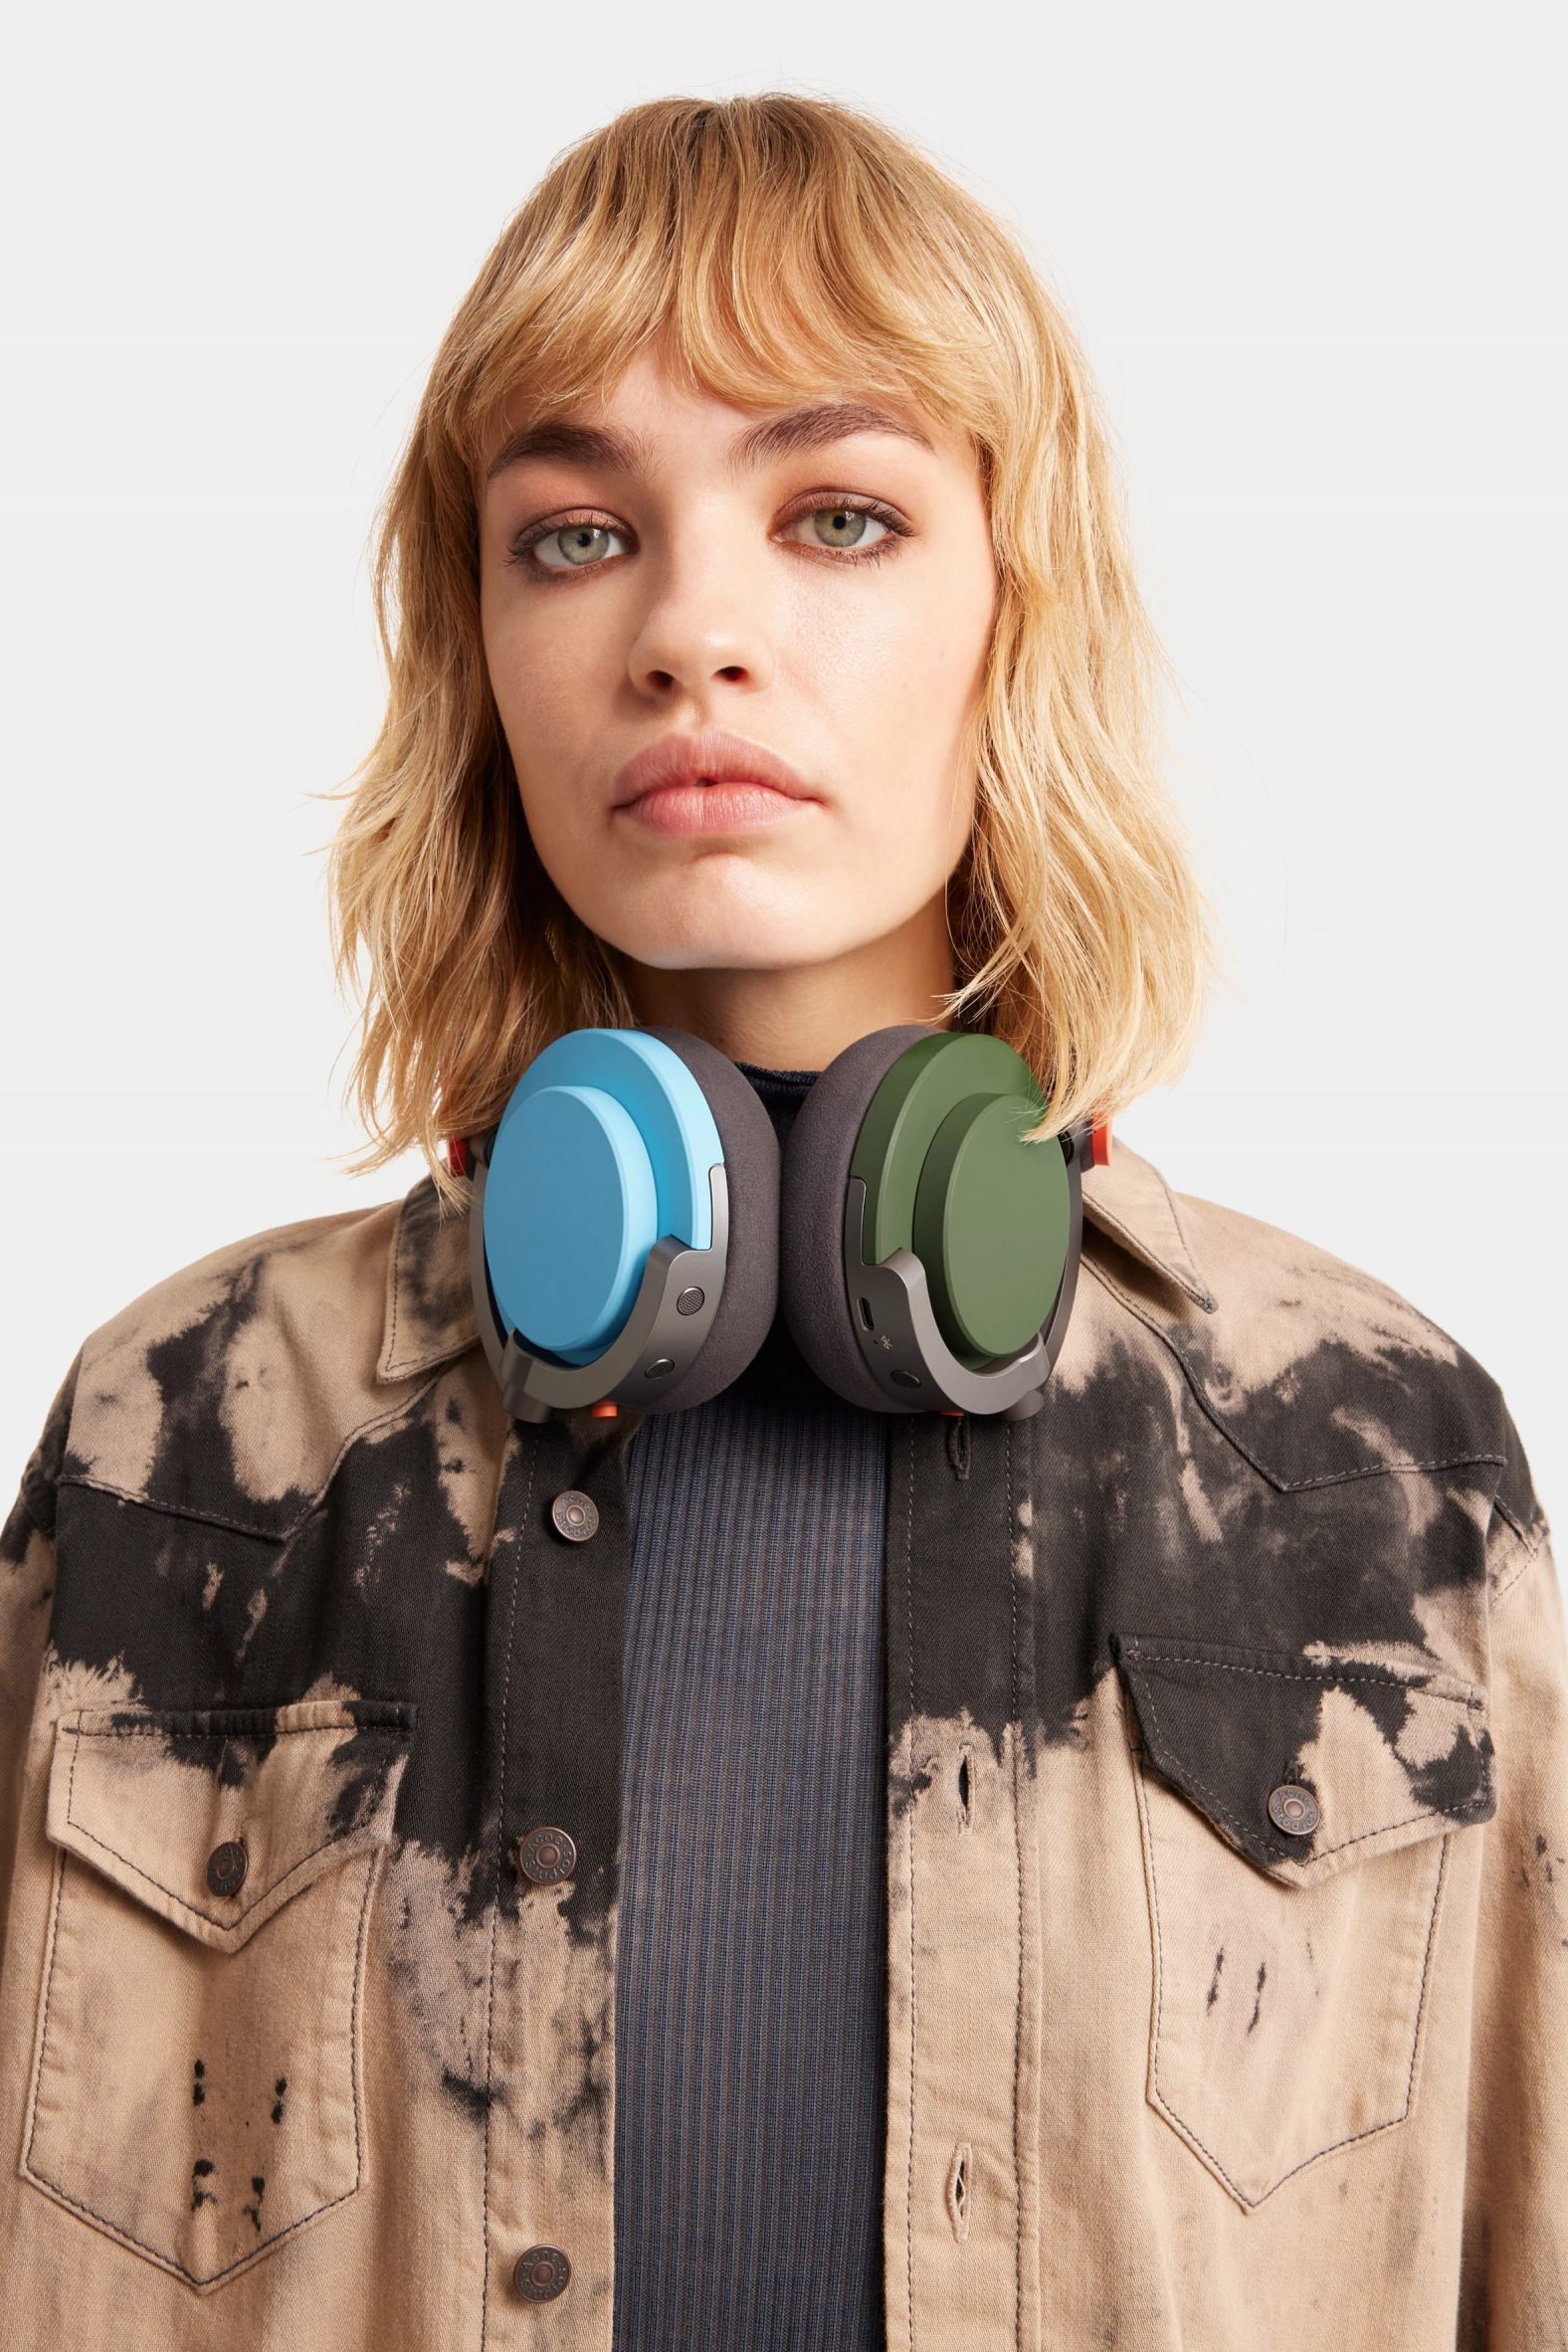 Headphones by Dyson